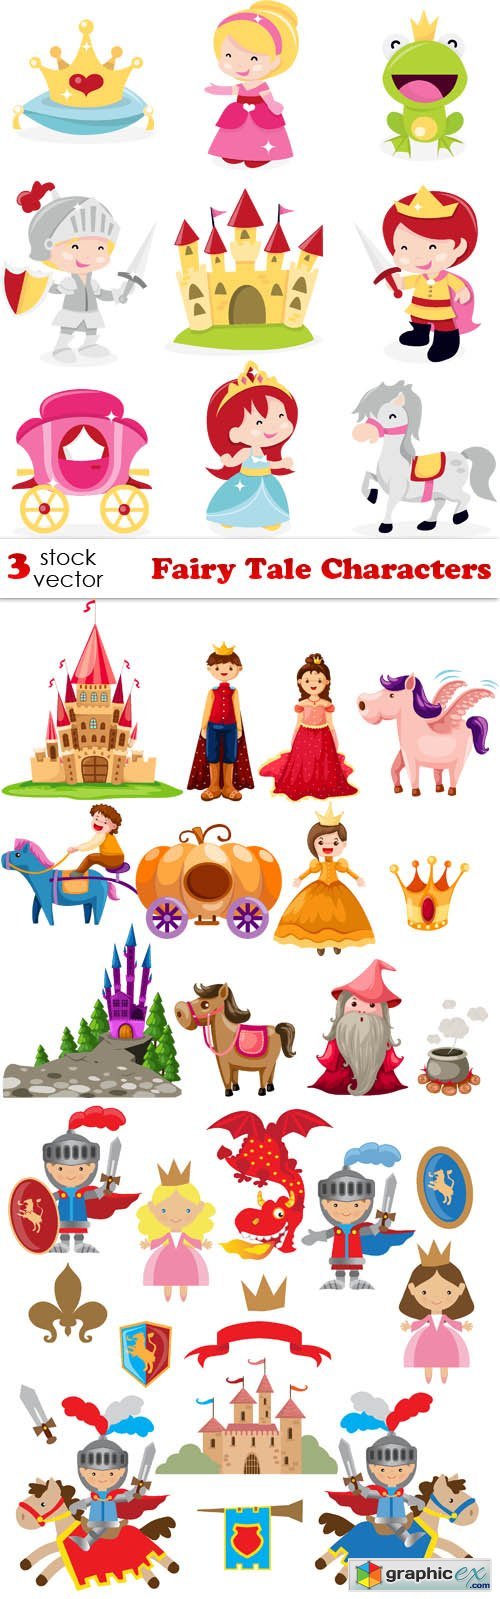 Vectors - Fairy Tale Characters